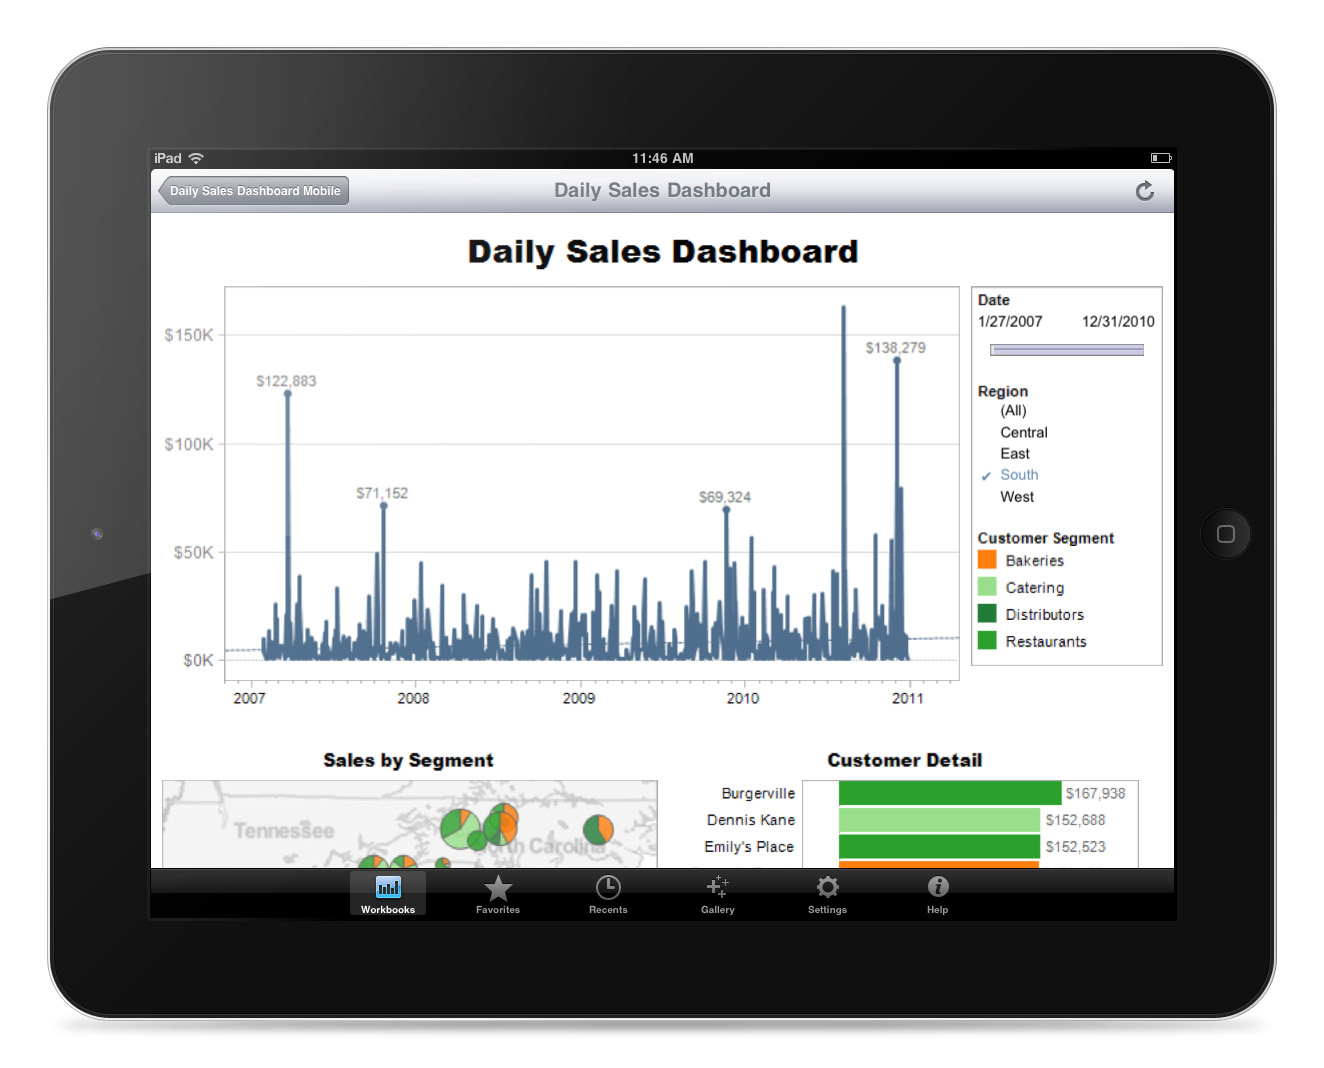 Tableau Software - Tableau daily sales dashboard